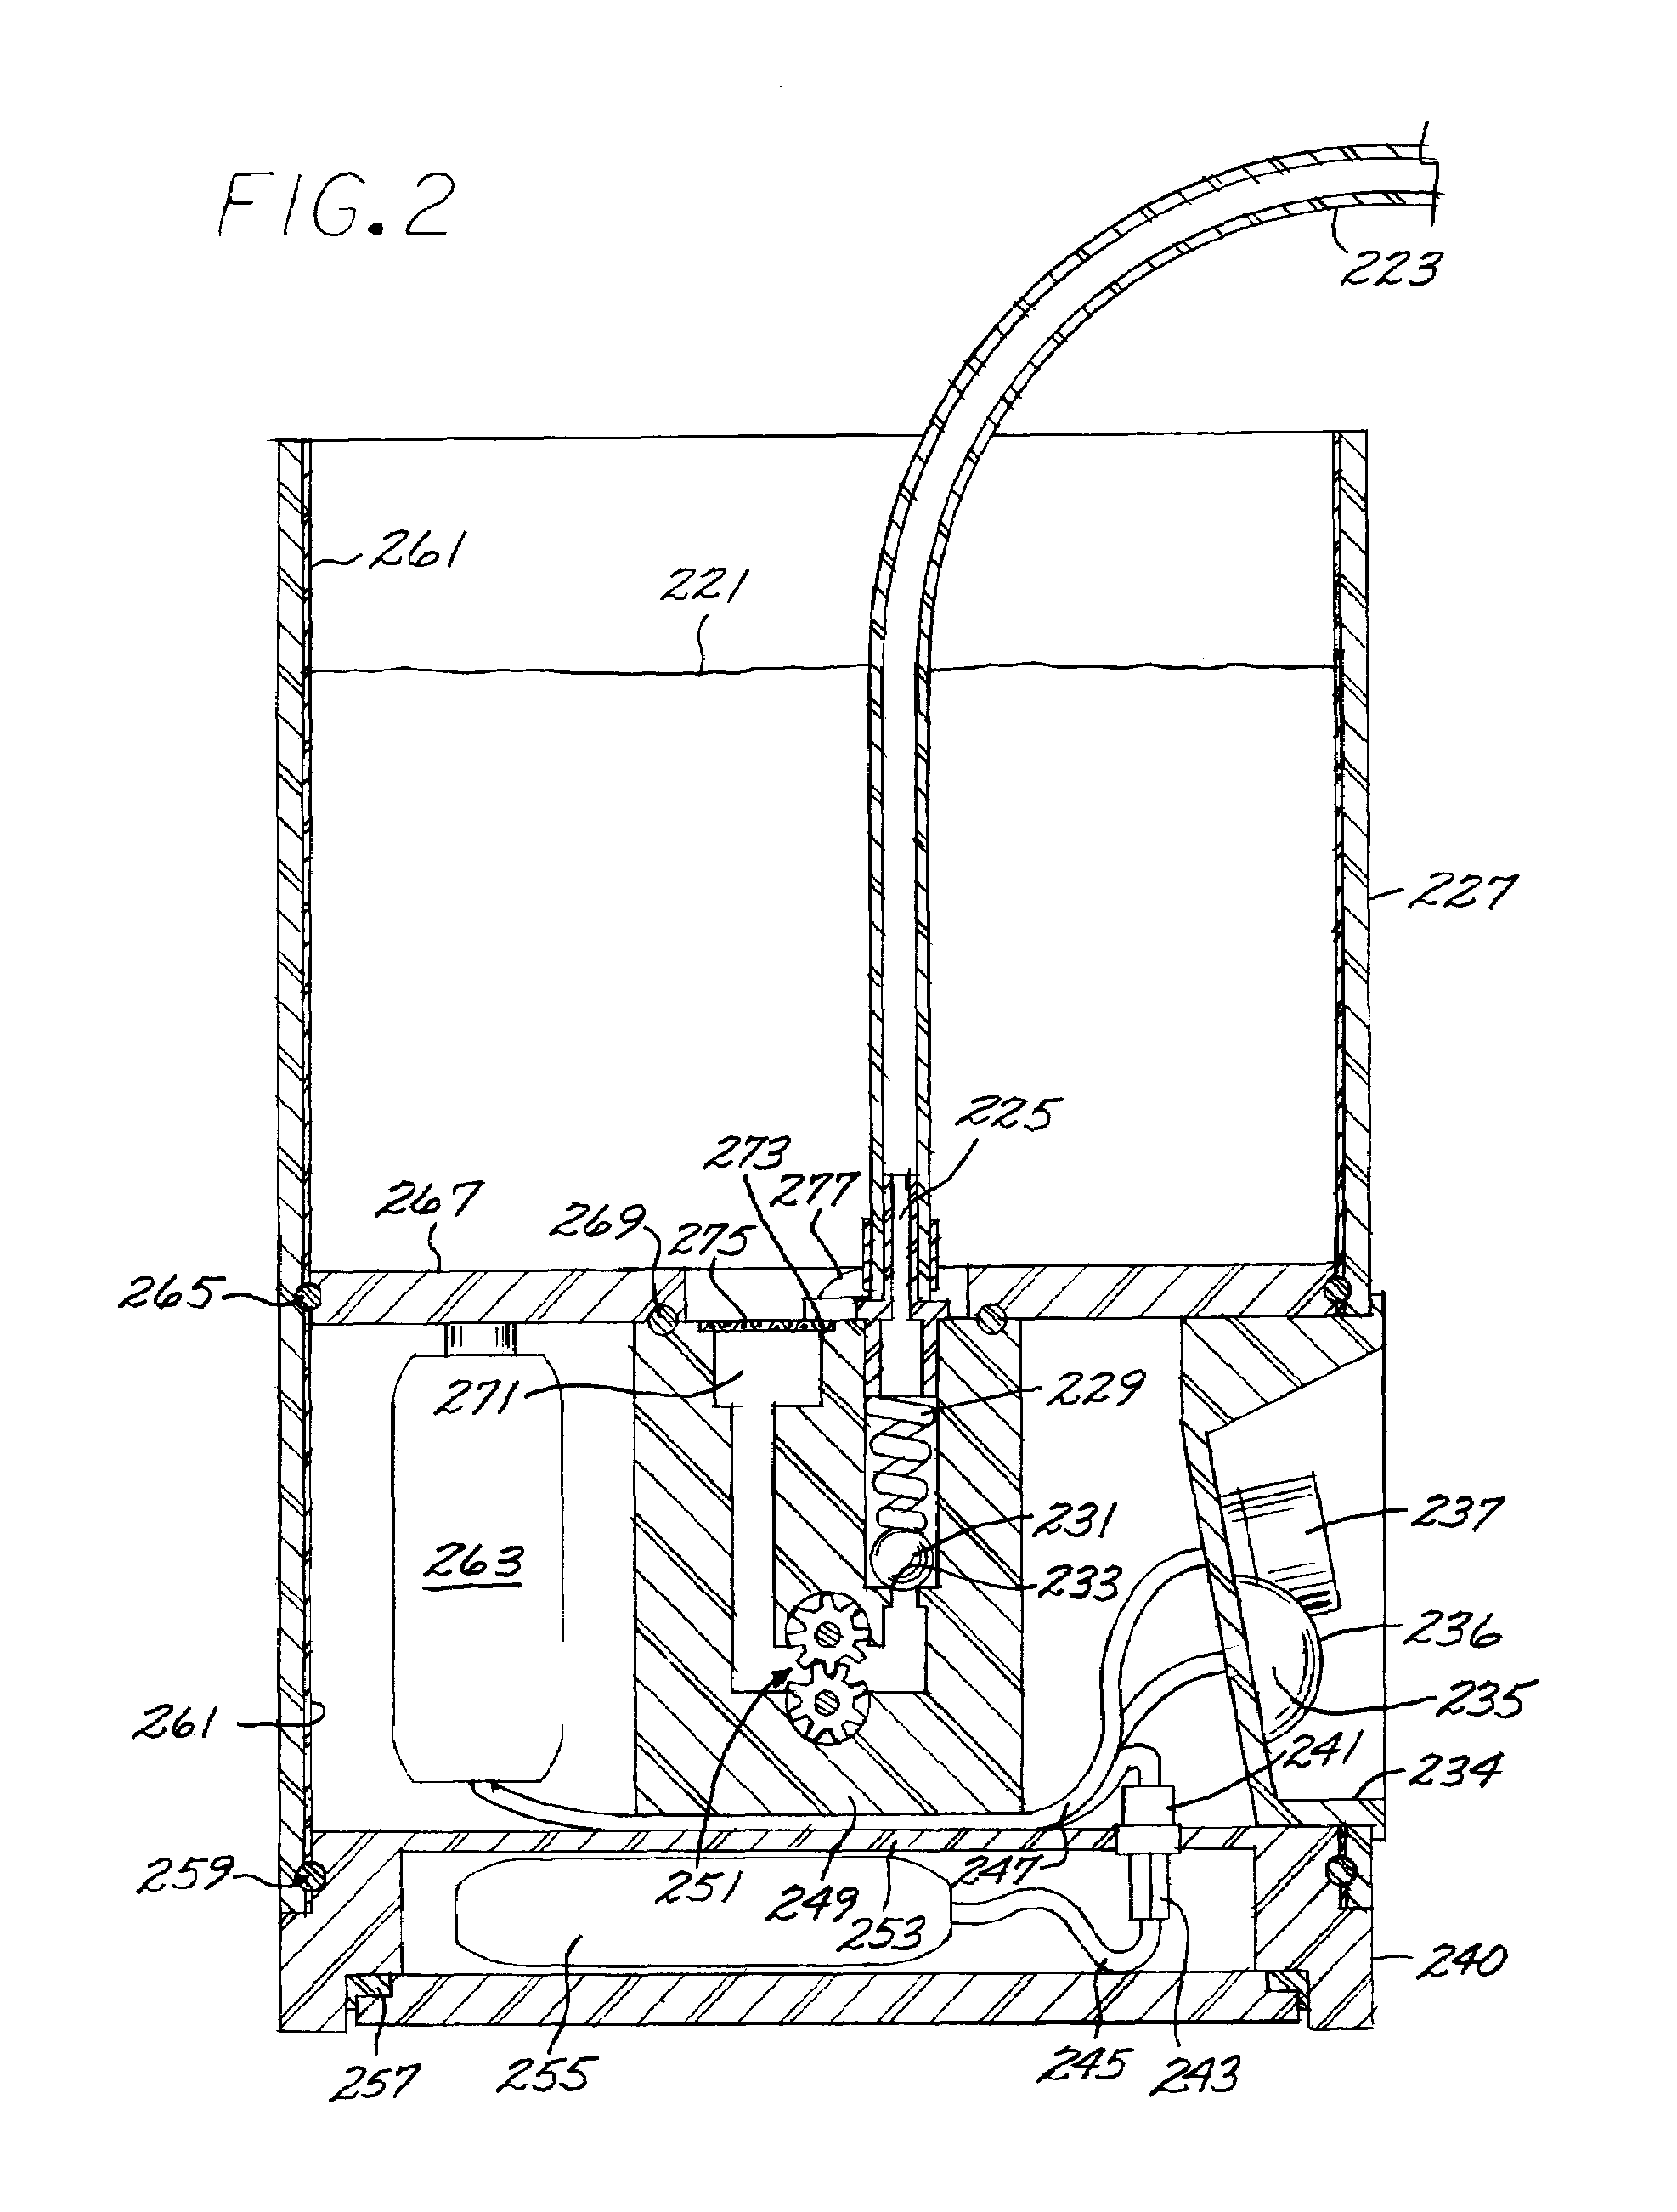 Portable instillation apparatus and method